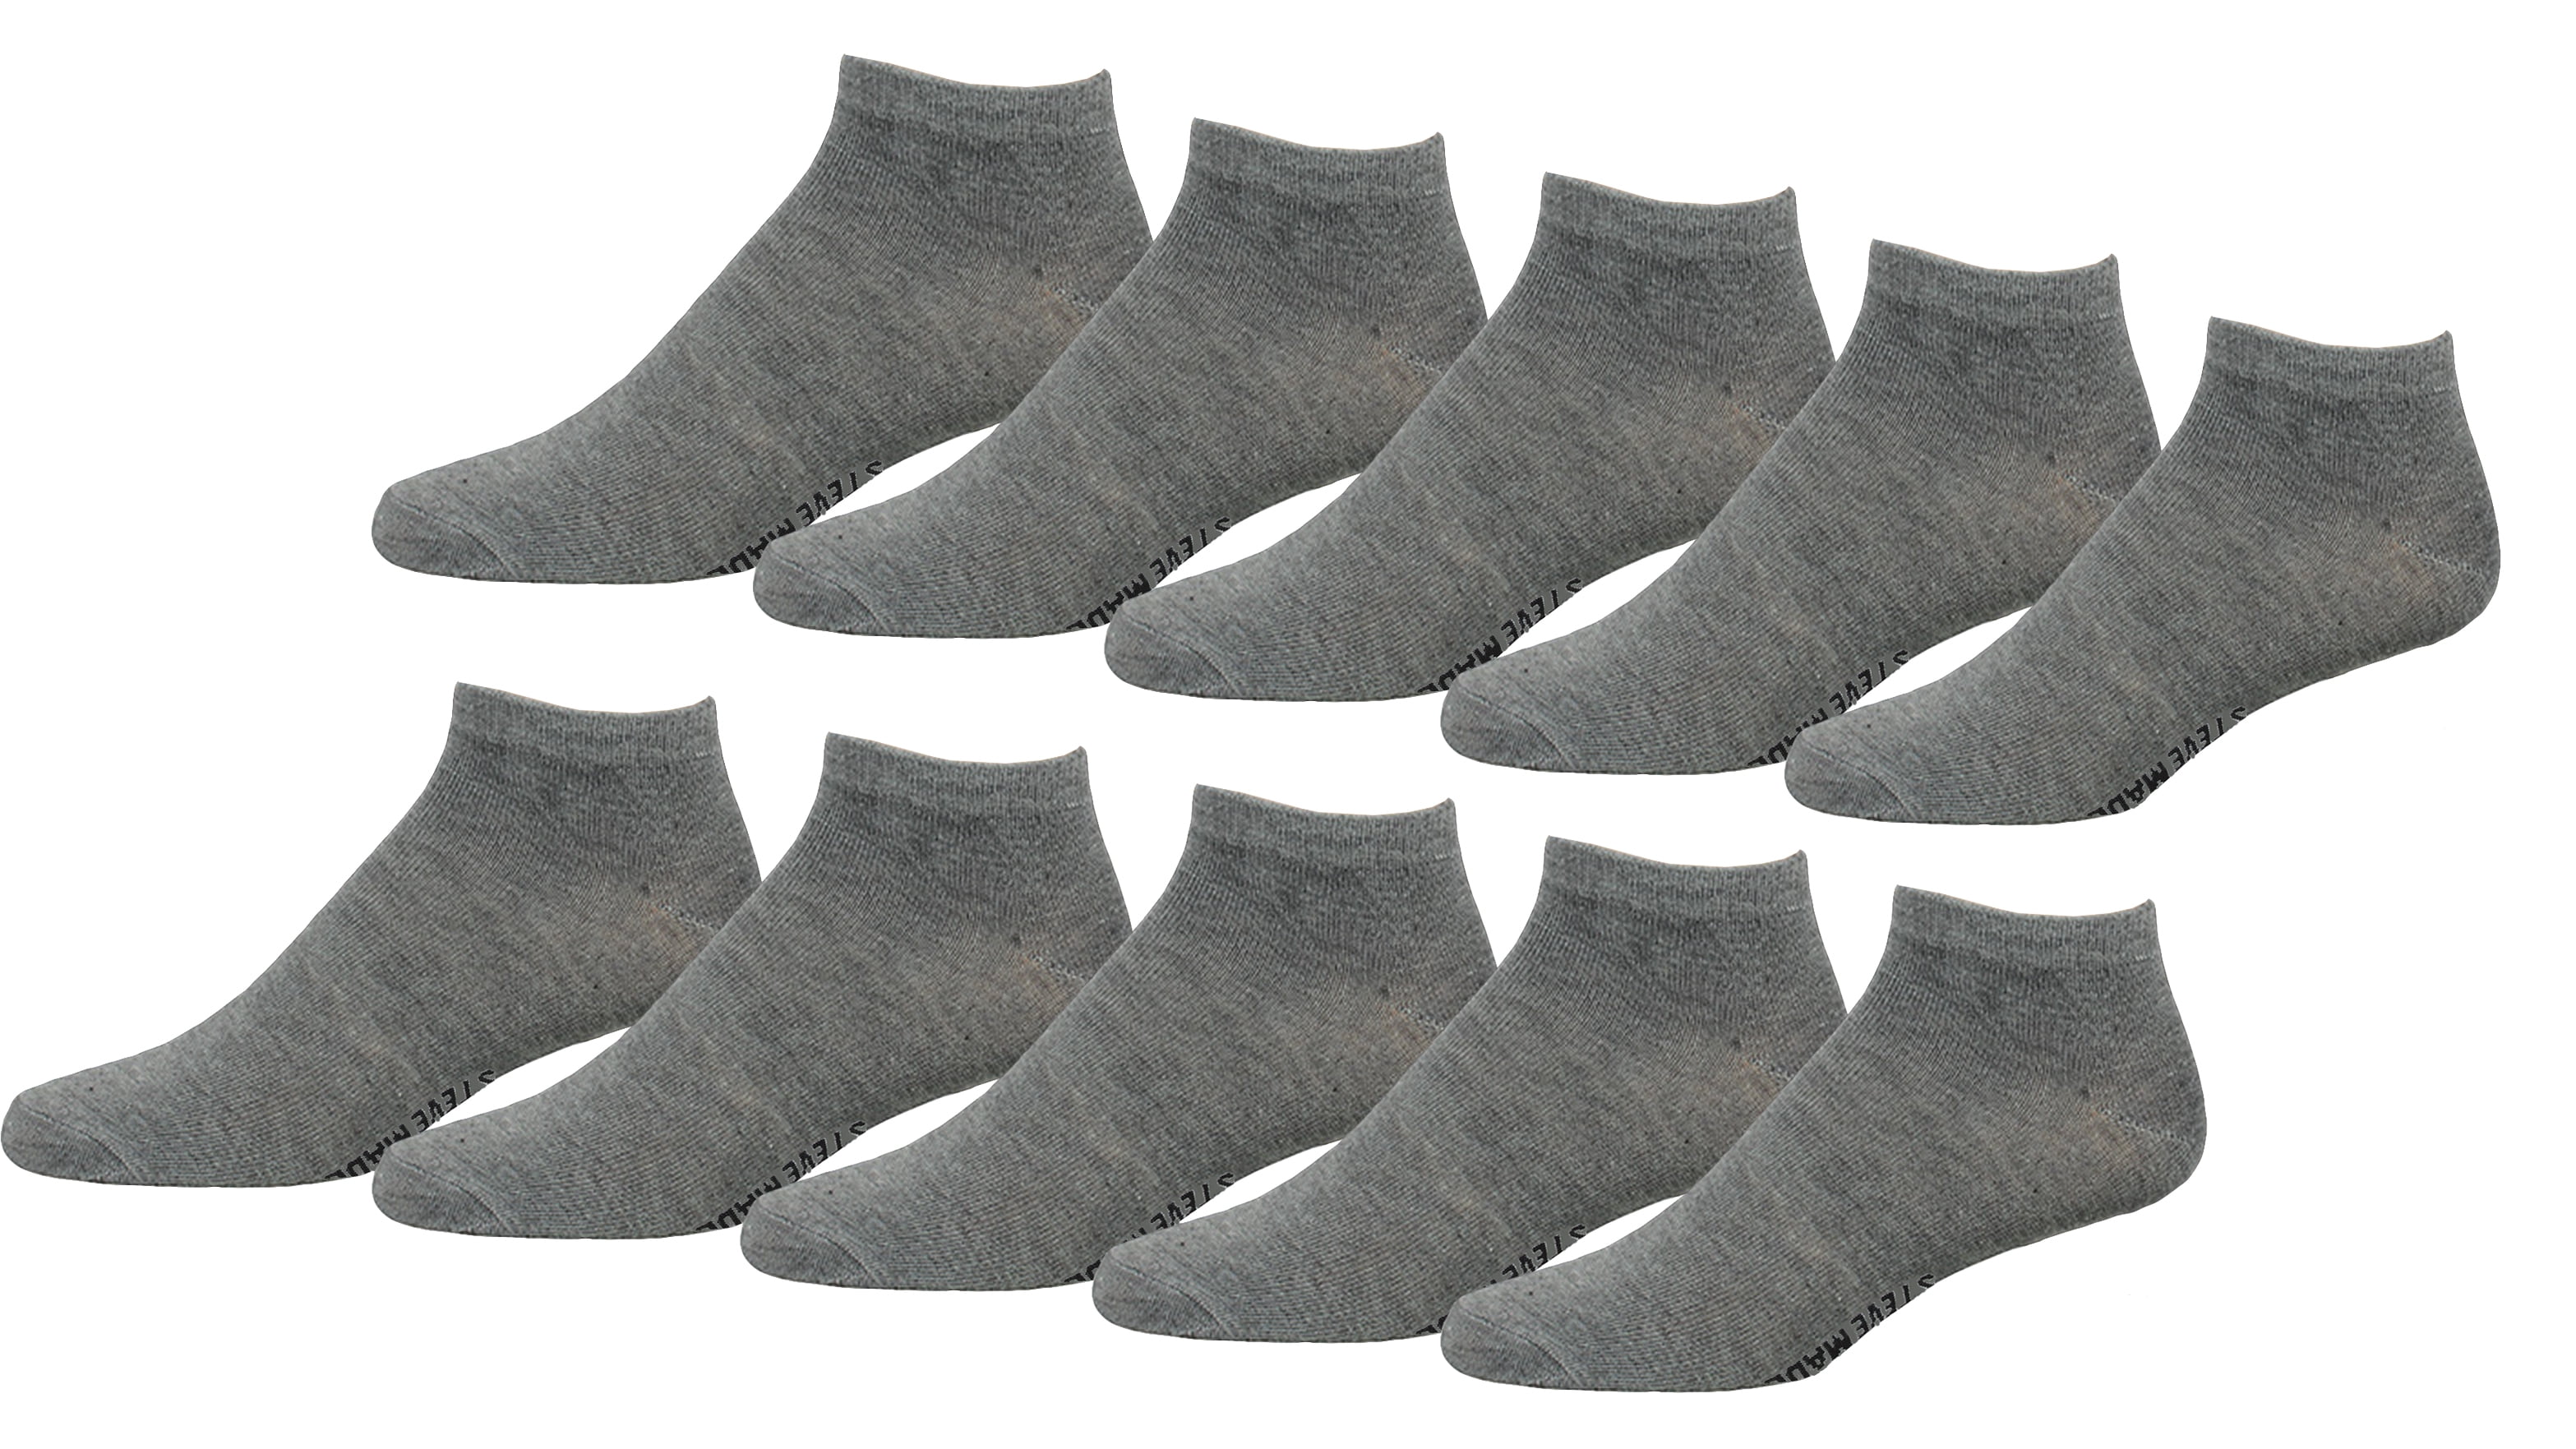 Steve Madden Low Cut Athletic Solid Socks for Men, 10-pack (Grey ...